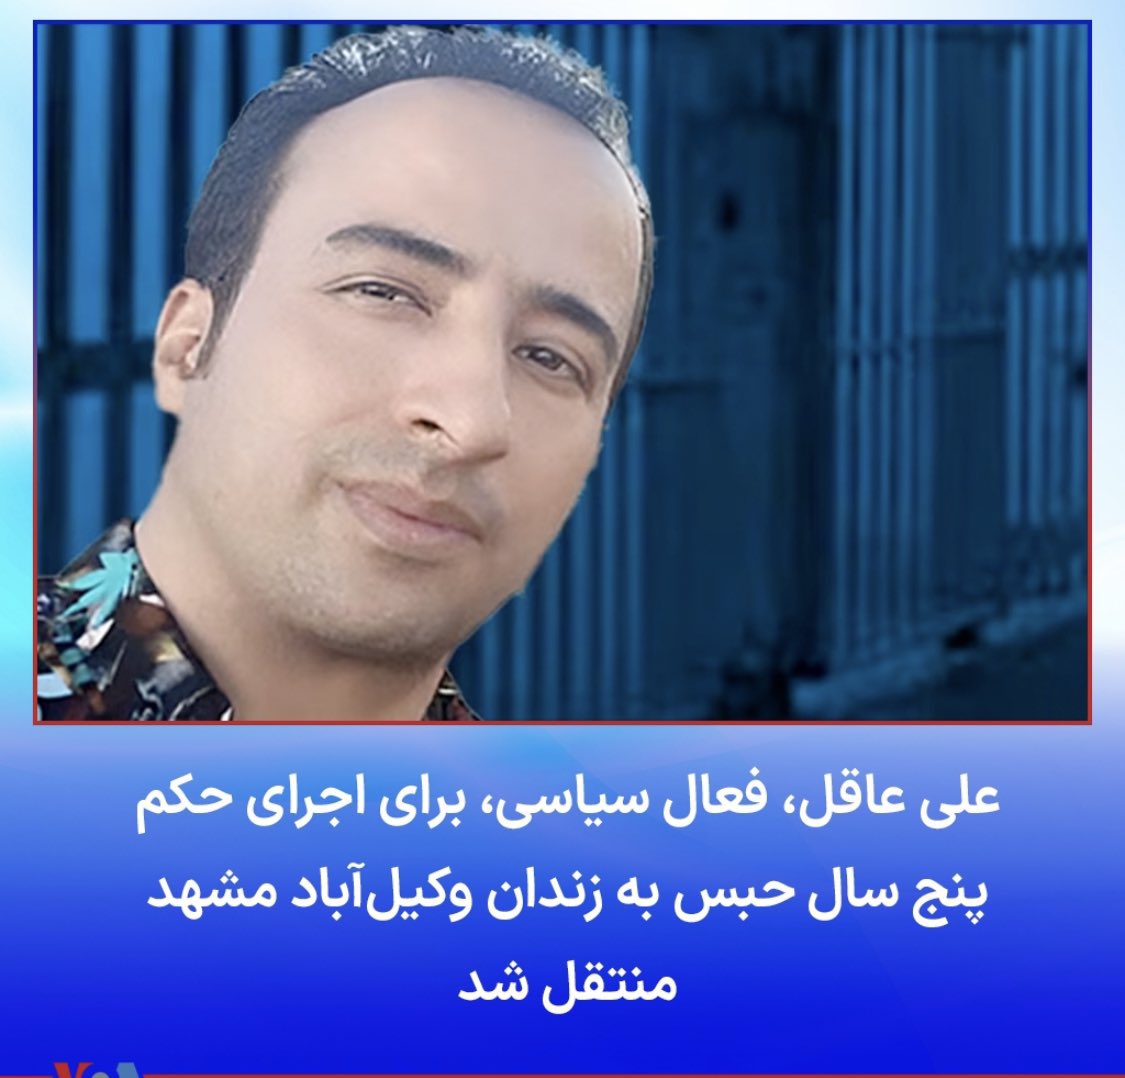 @Veronicasarina #علی_عاقل فعال سیاسی و پدر سه فرزند و هموطن باشرفی که با اتهامات ساختگی رژیم اراذل و اوباش، پنج سال حکم زندان گرفت اما سر خم نکرد
صدای او هستیم

#توماج_صالحى 
#IRGCterrorists